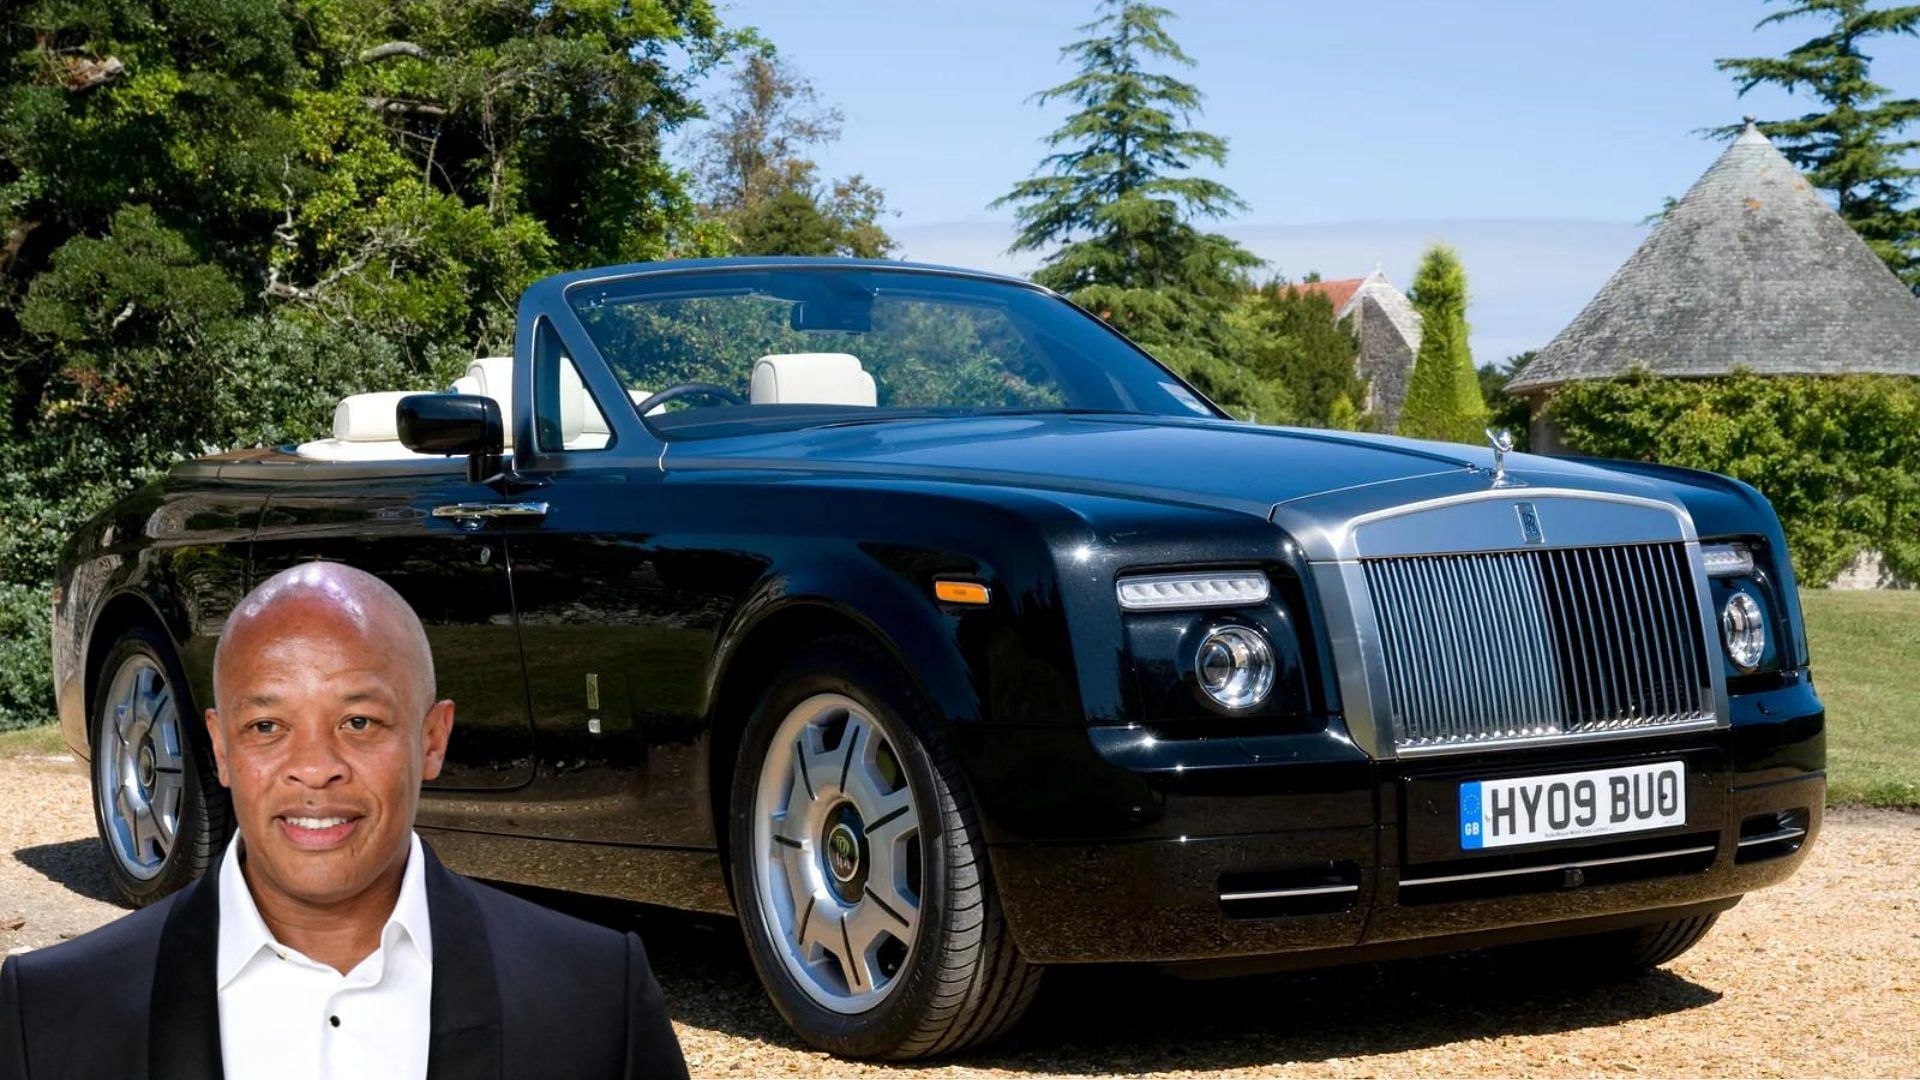 Dr Dre's Rolls Royce Phantom Drophead Coupe